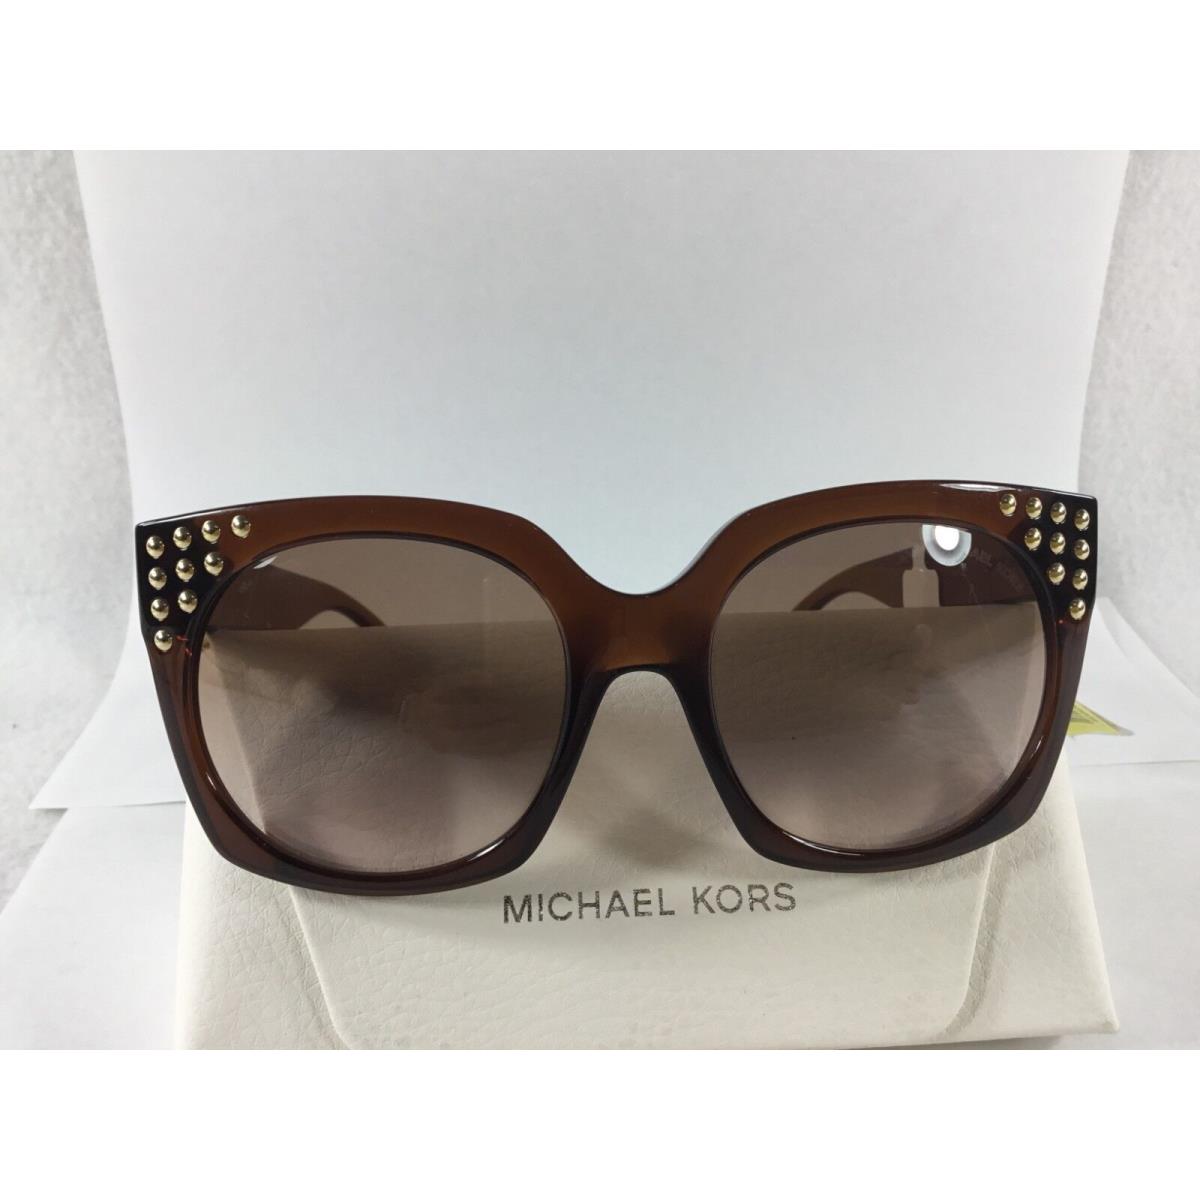 Michael Kors sunglasses  - Brown , Transparent brown and gold Frame, Brown grey Gradient Lens 0